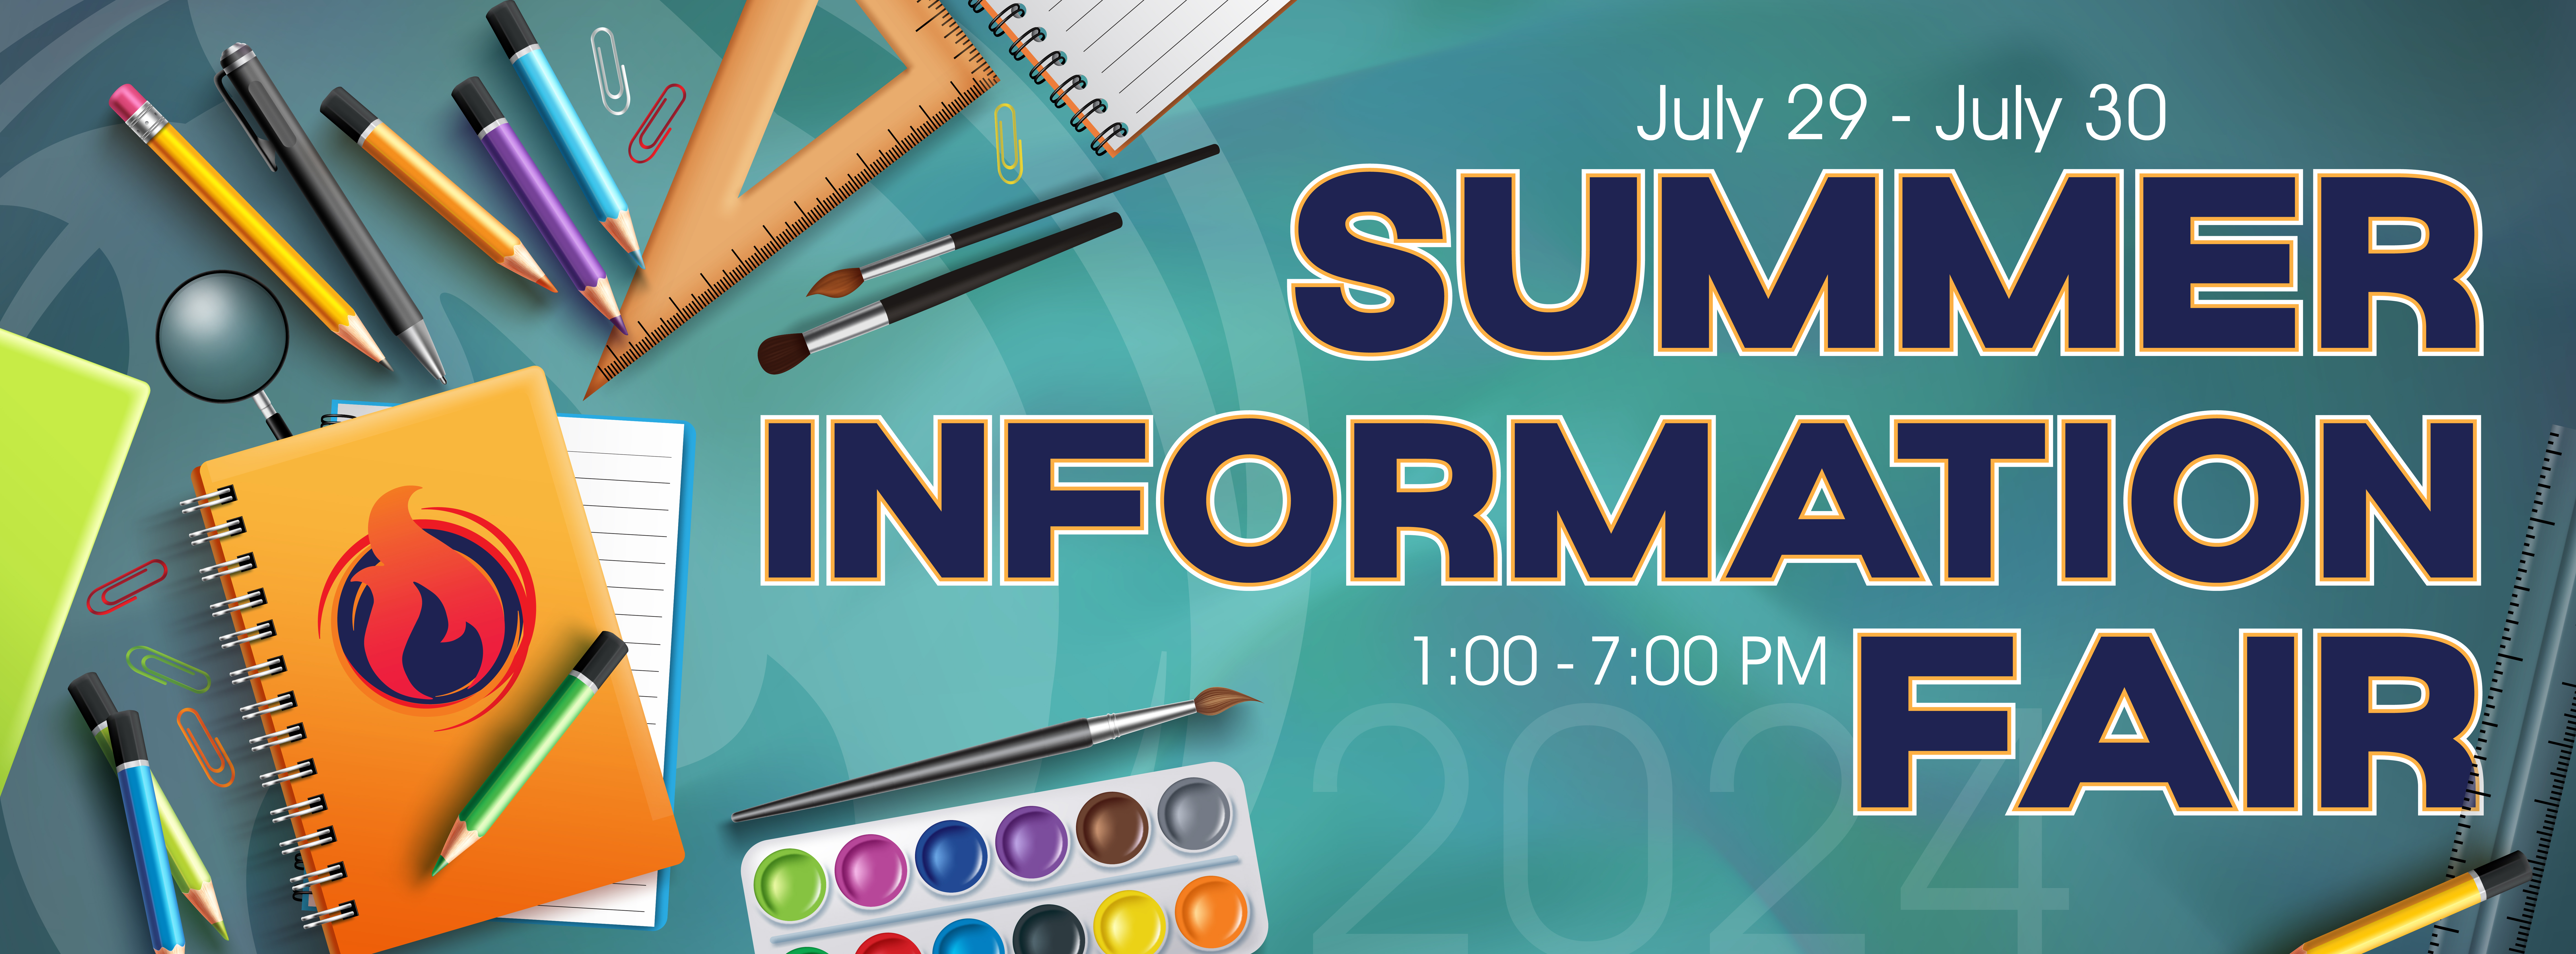 Summer Information Fair